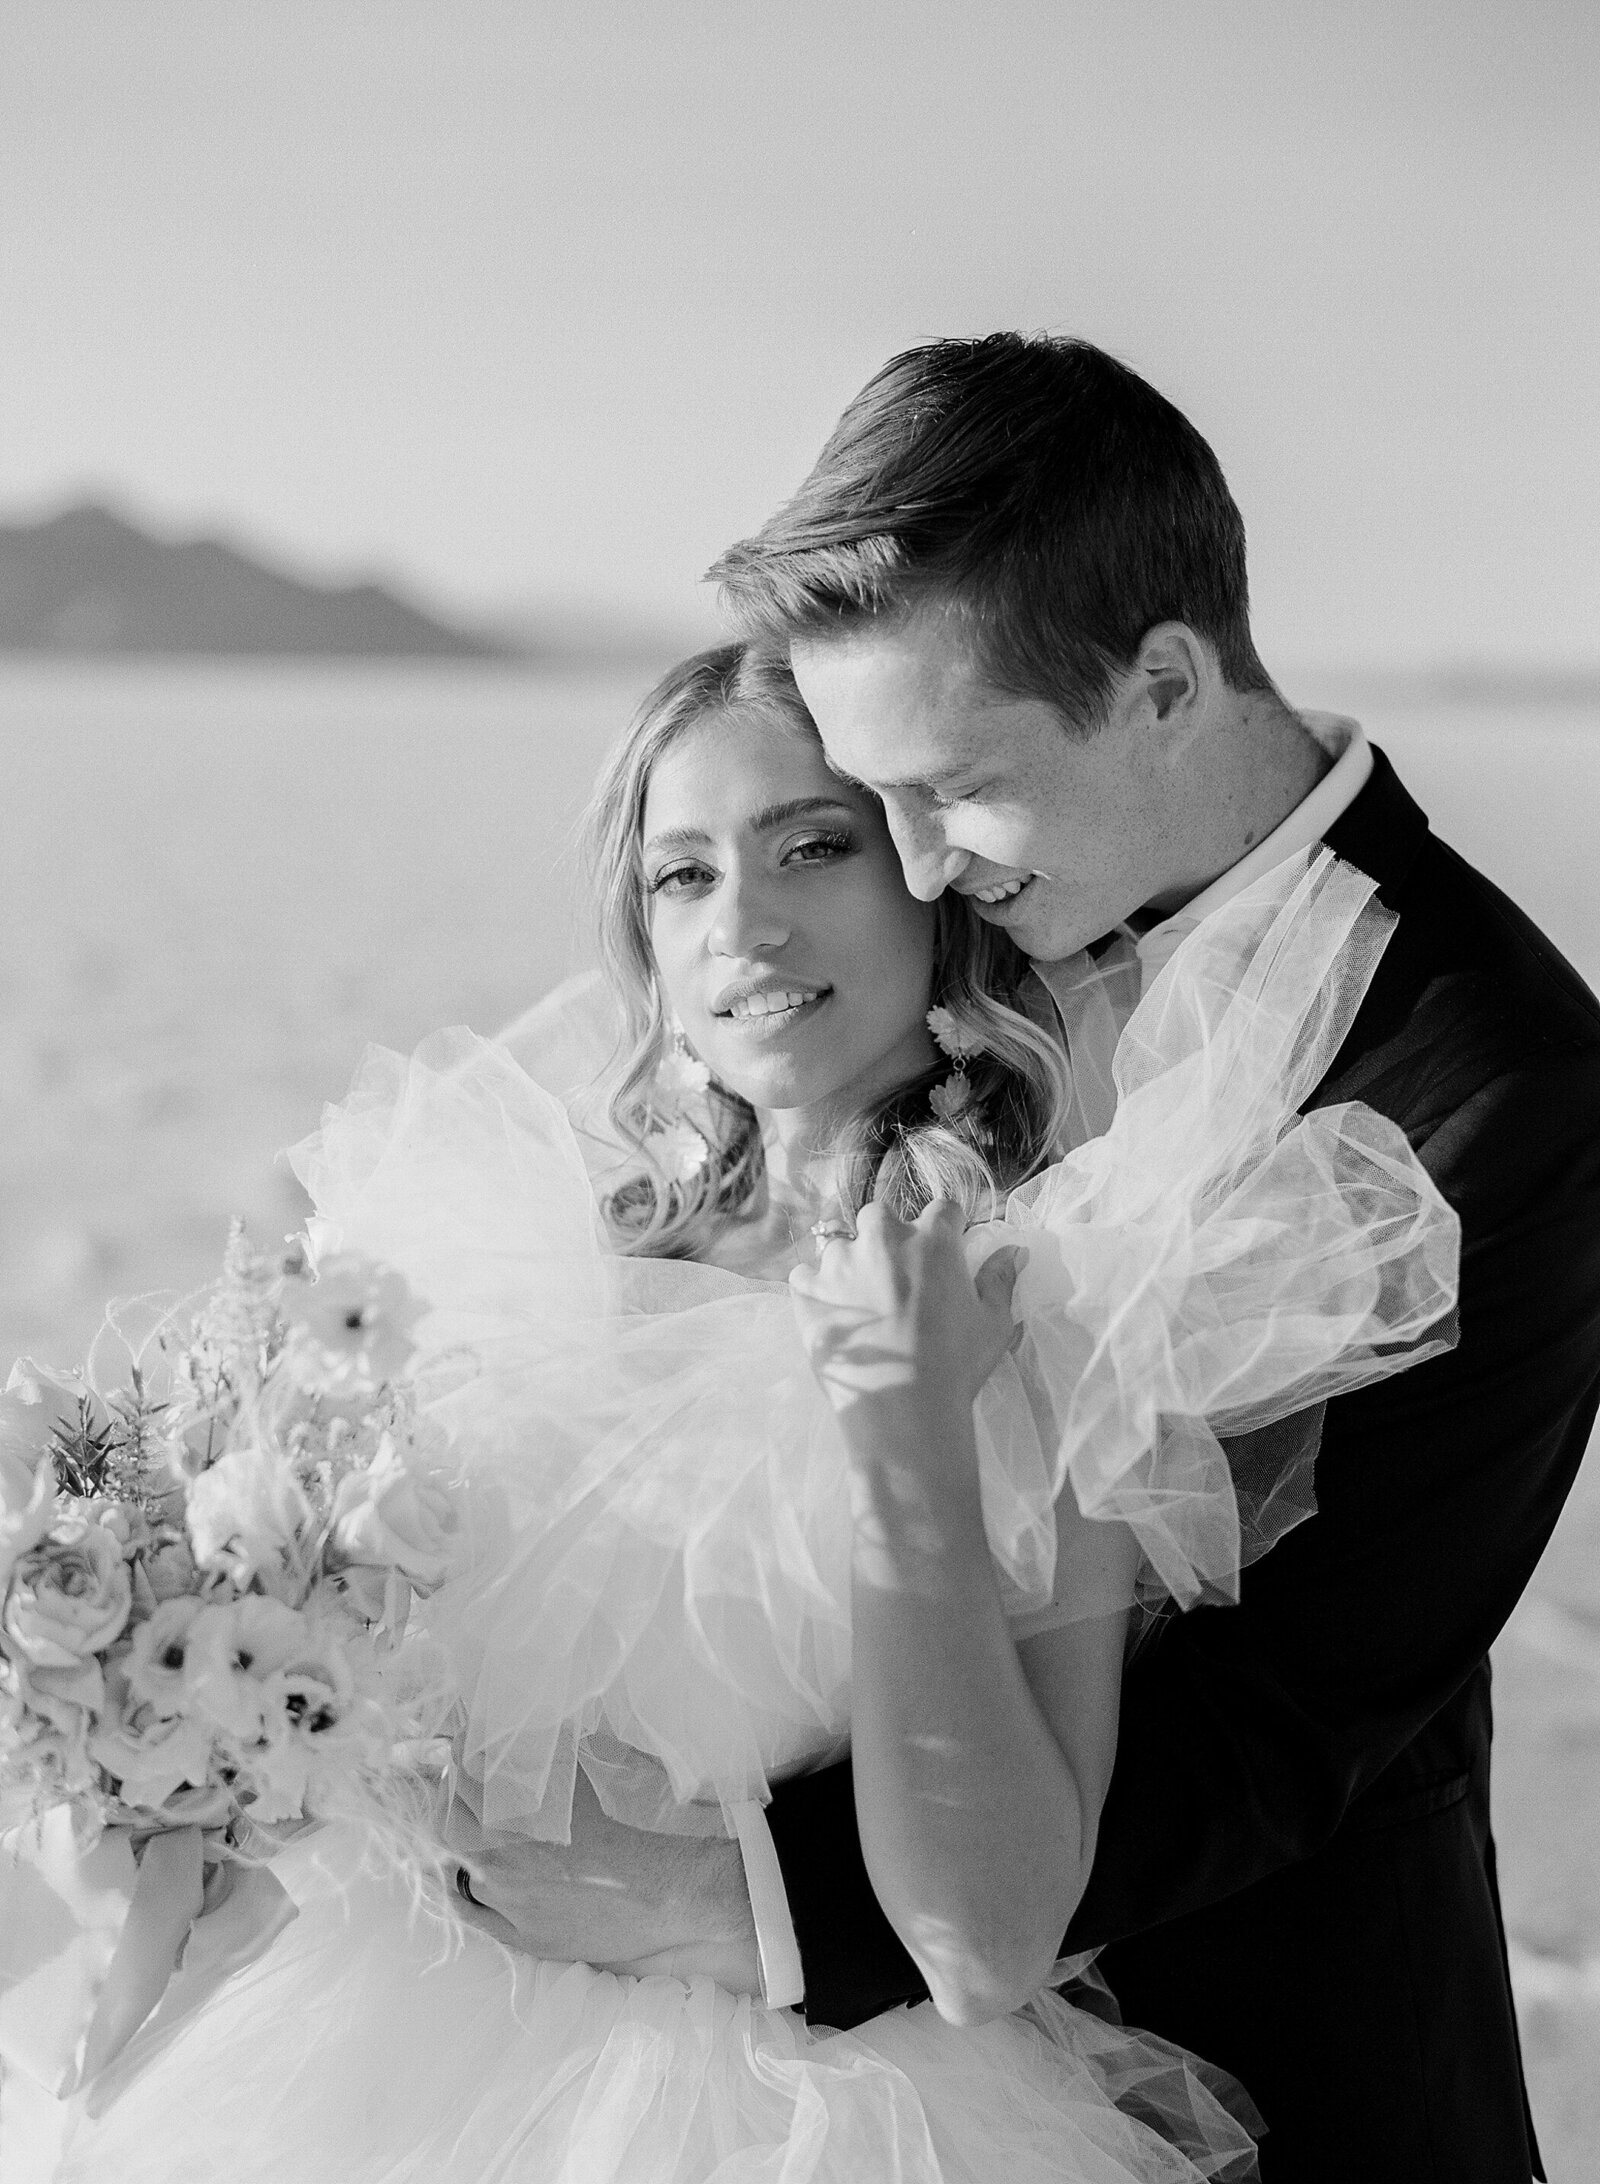 Bonneville-Salt-Flats-Session-Salt-Lake-City-Utah-Wedding-Photographer-Destination-wedding-photographer-Jessie-Barksdale-Photography_121